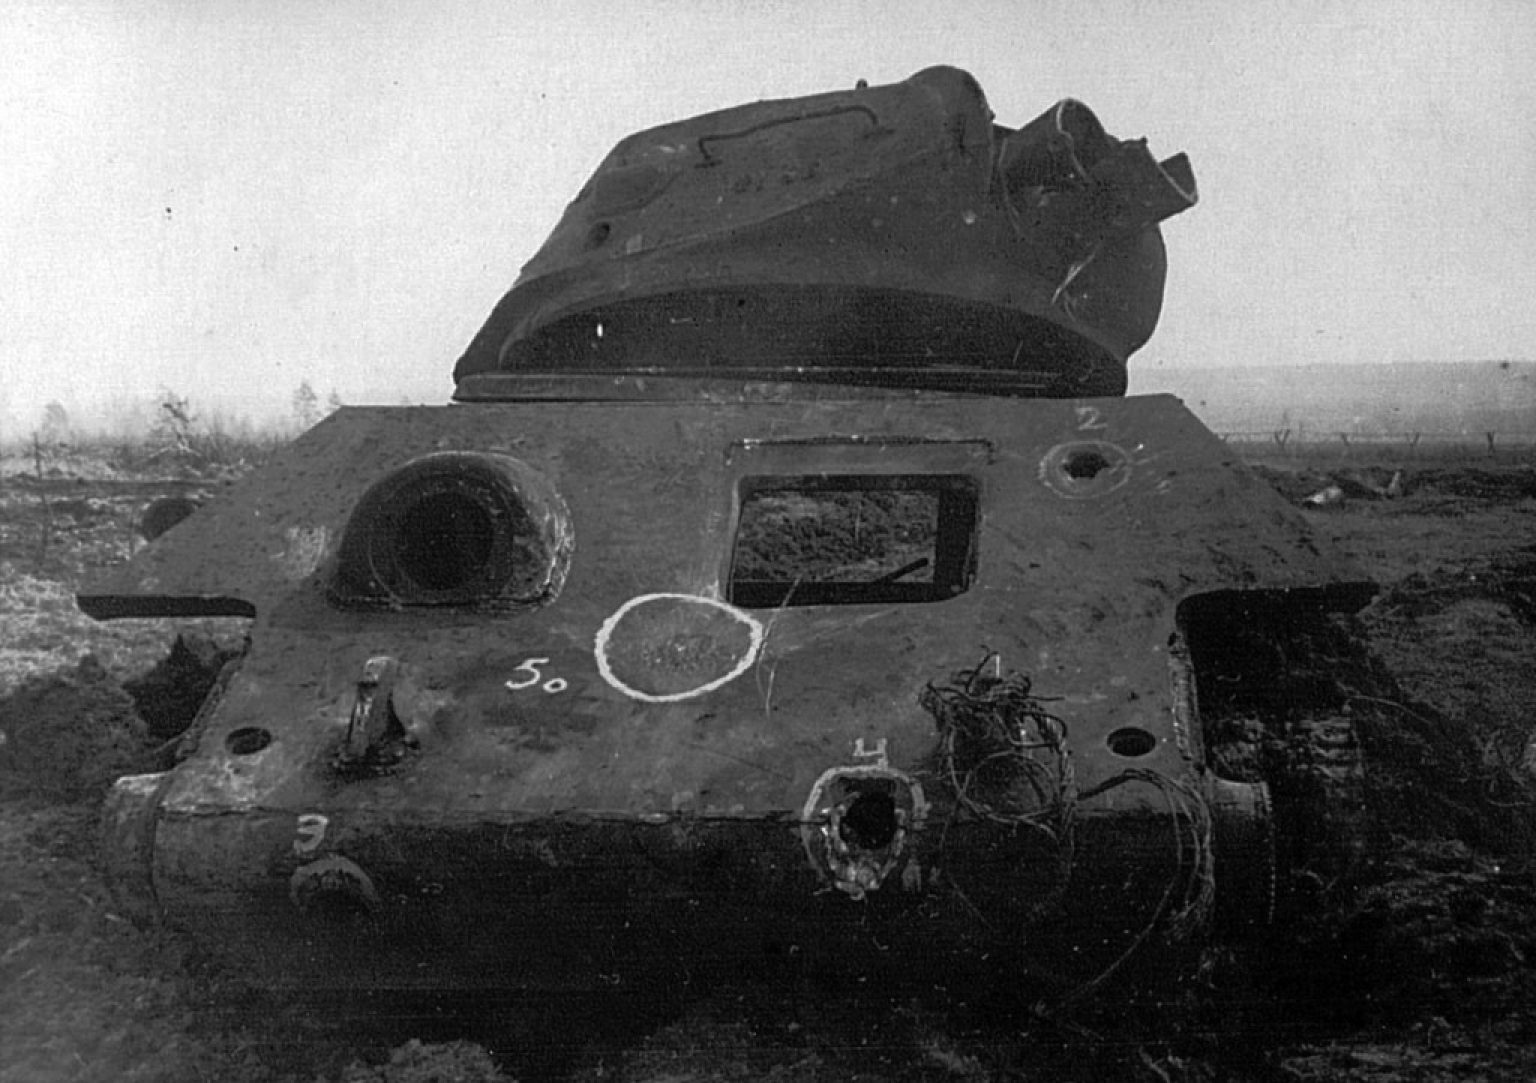 Мм пробитие. Т-34 С 88 мм пушкой KWK 36l/36. Т 34 после попадания снаряда тигра. Брони пробитие кв1.